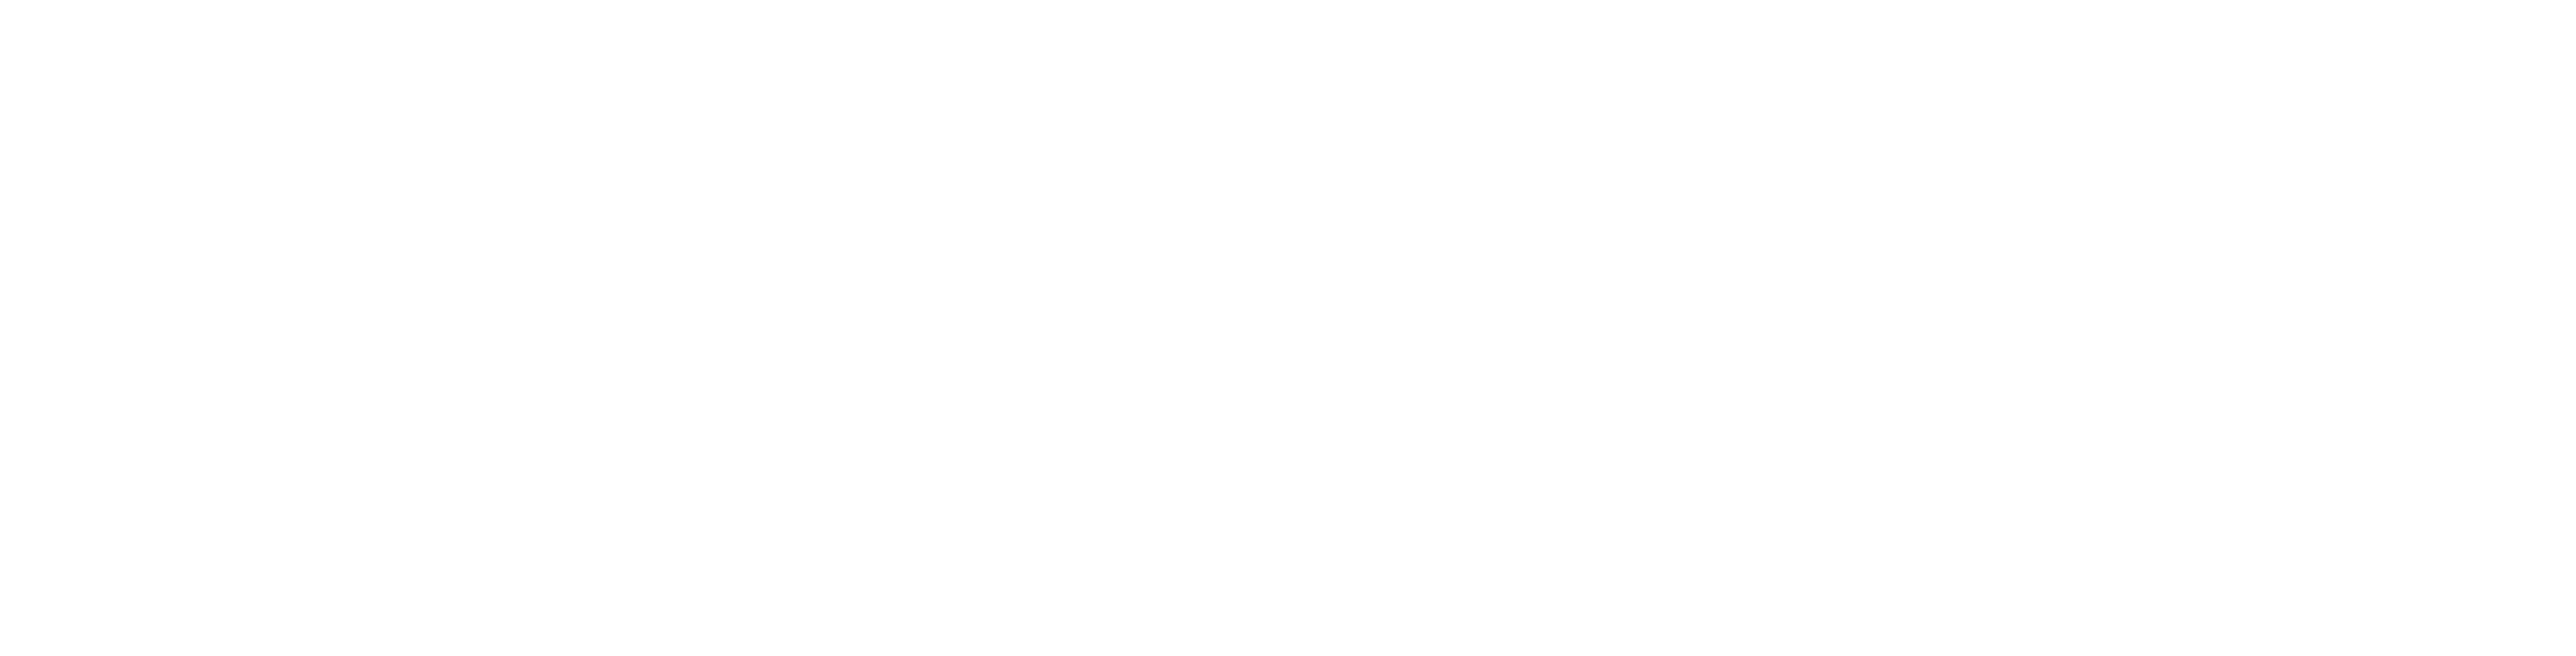 Smmwebforum - The Biggest SMM Panel Community!